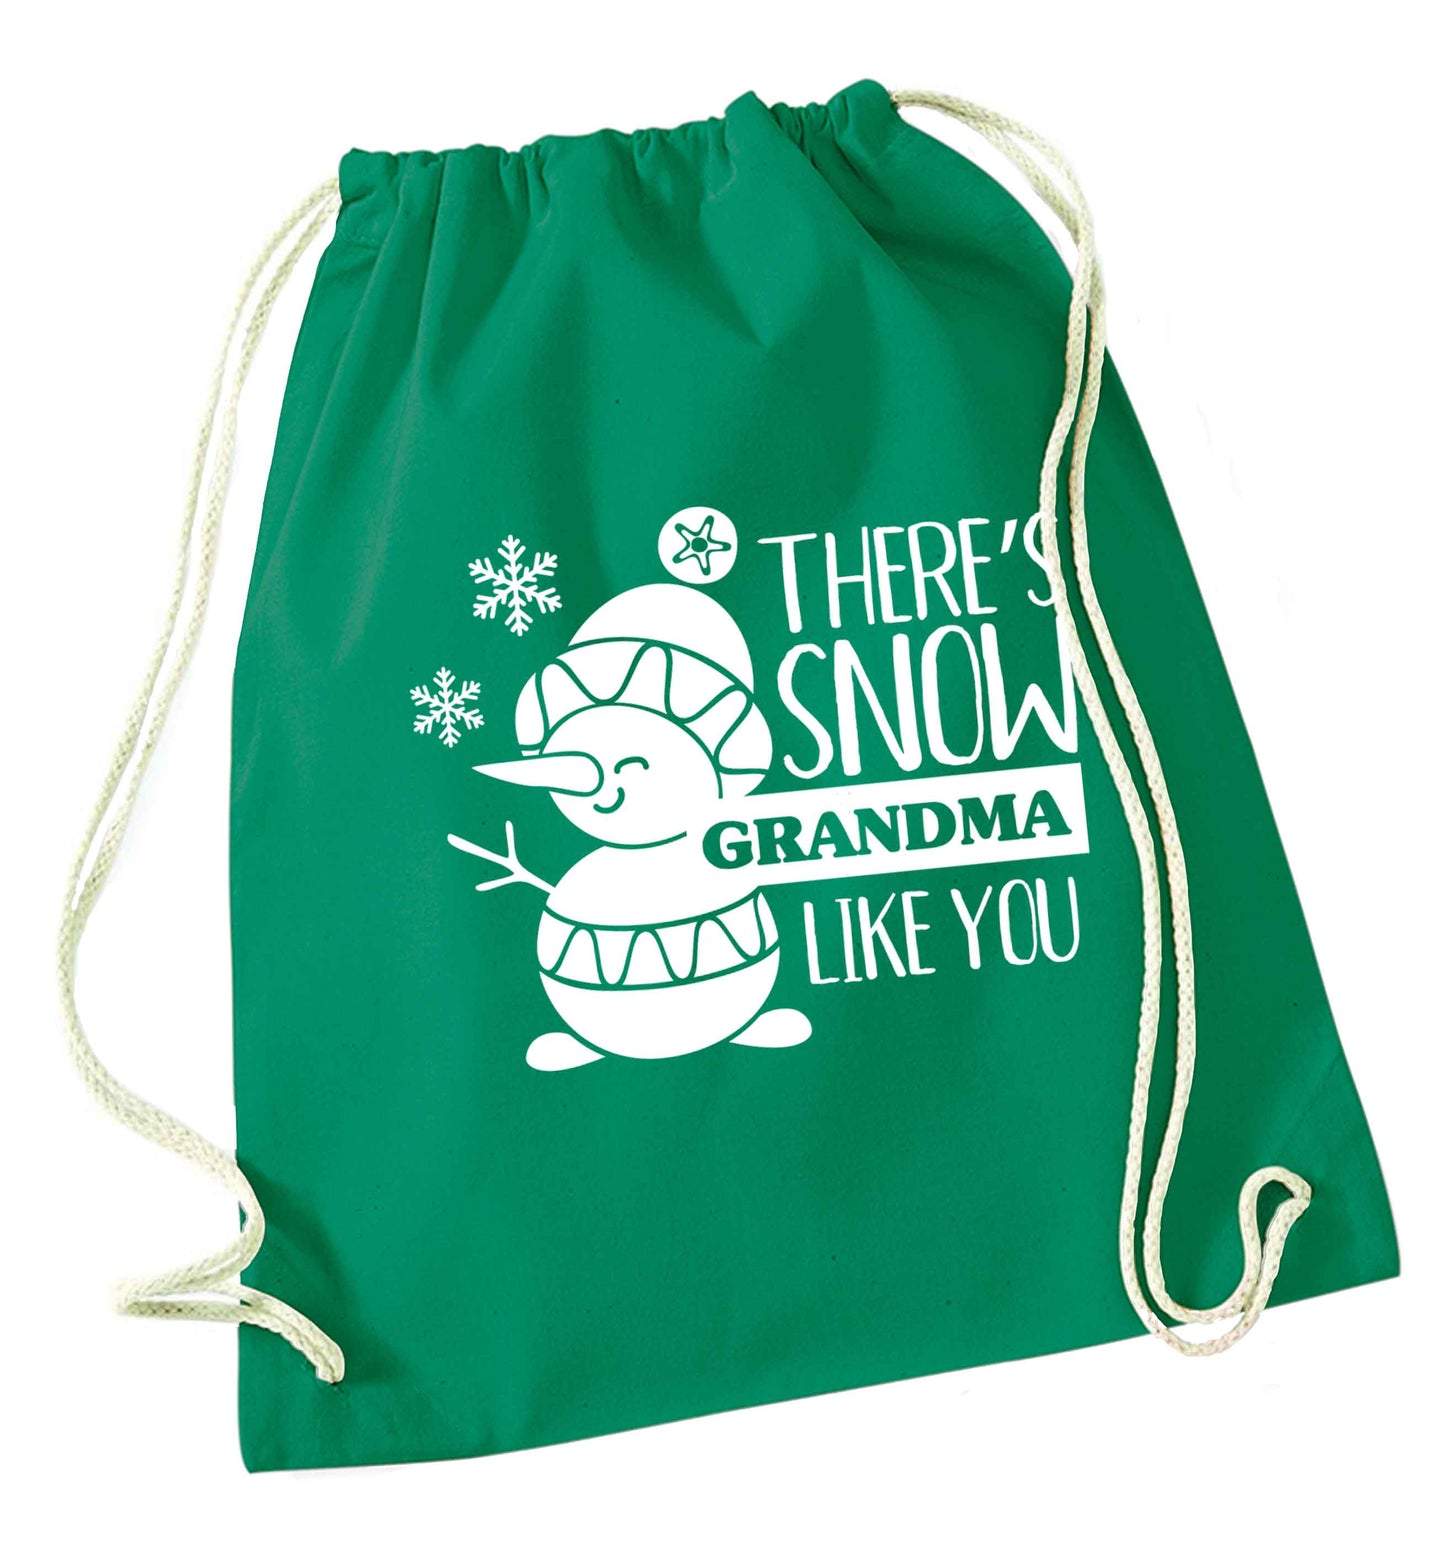 There's snow grandma like you green drawstring bag